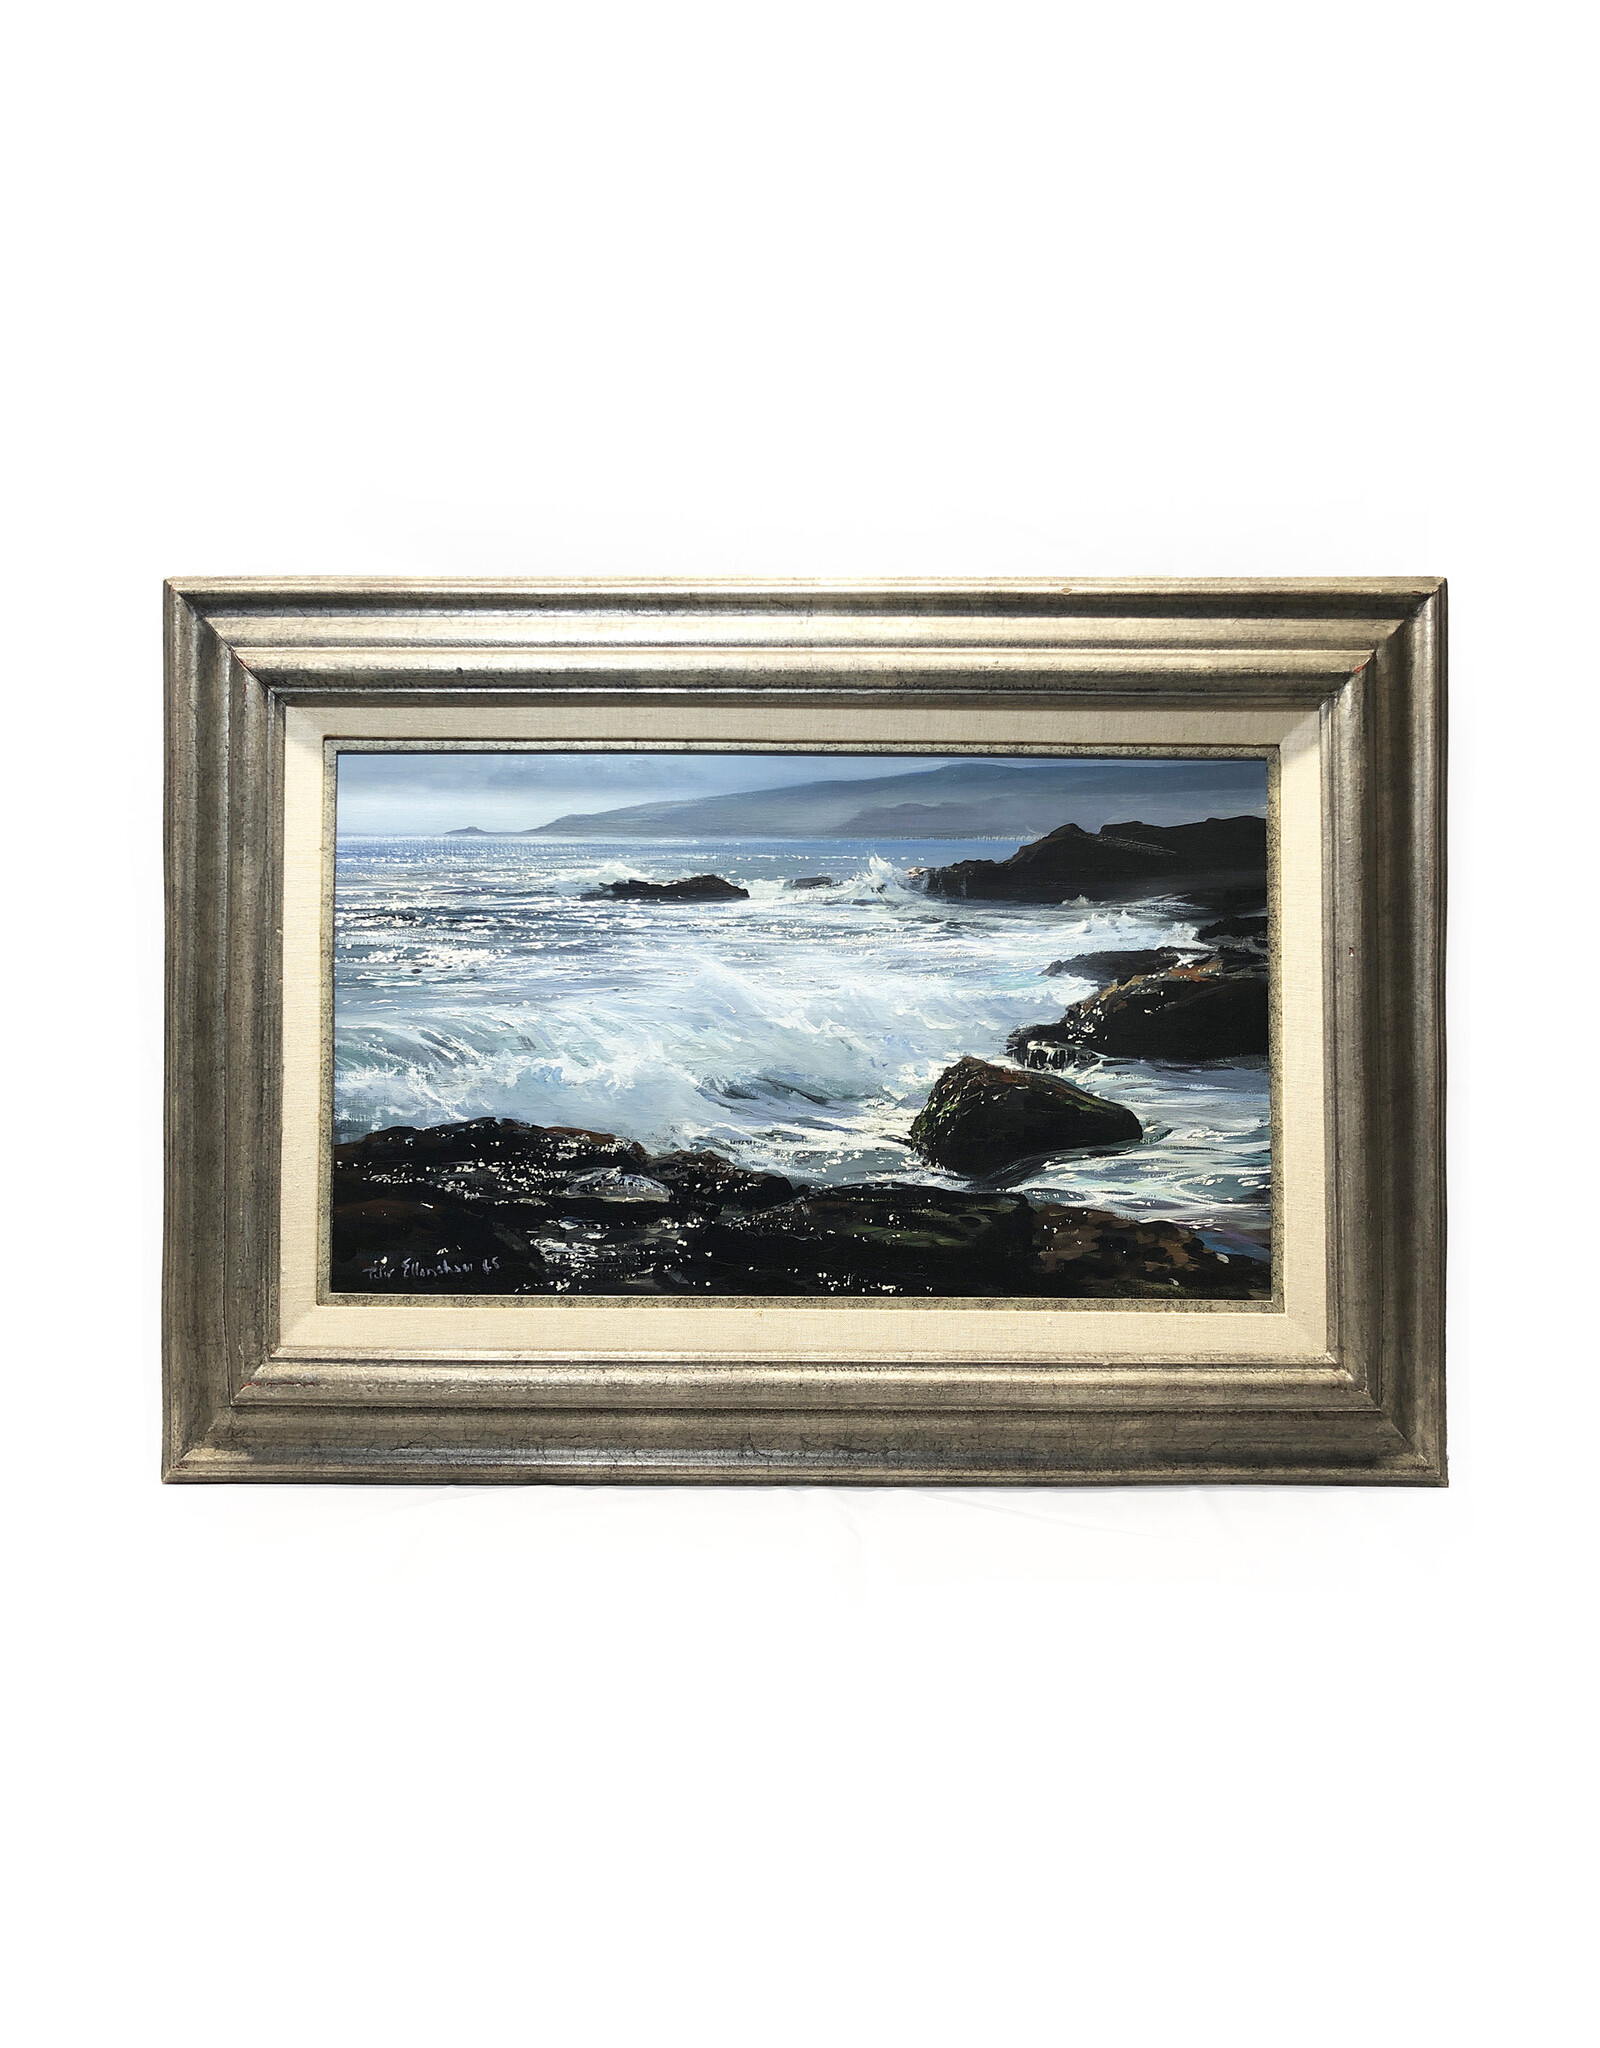 Peter Ellenshaw Waves Crashing on Rocks Coastal Scene Large Oil Painting on Canvas 14x24 in. 1965